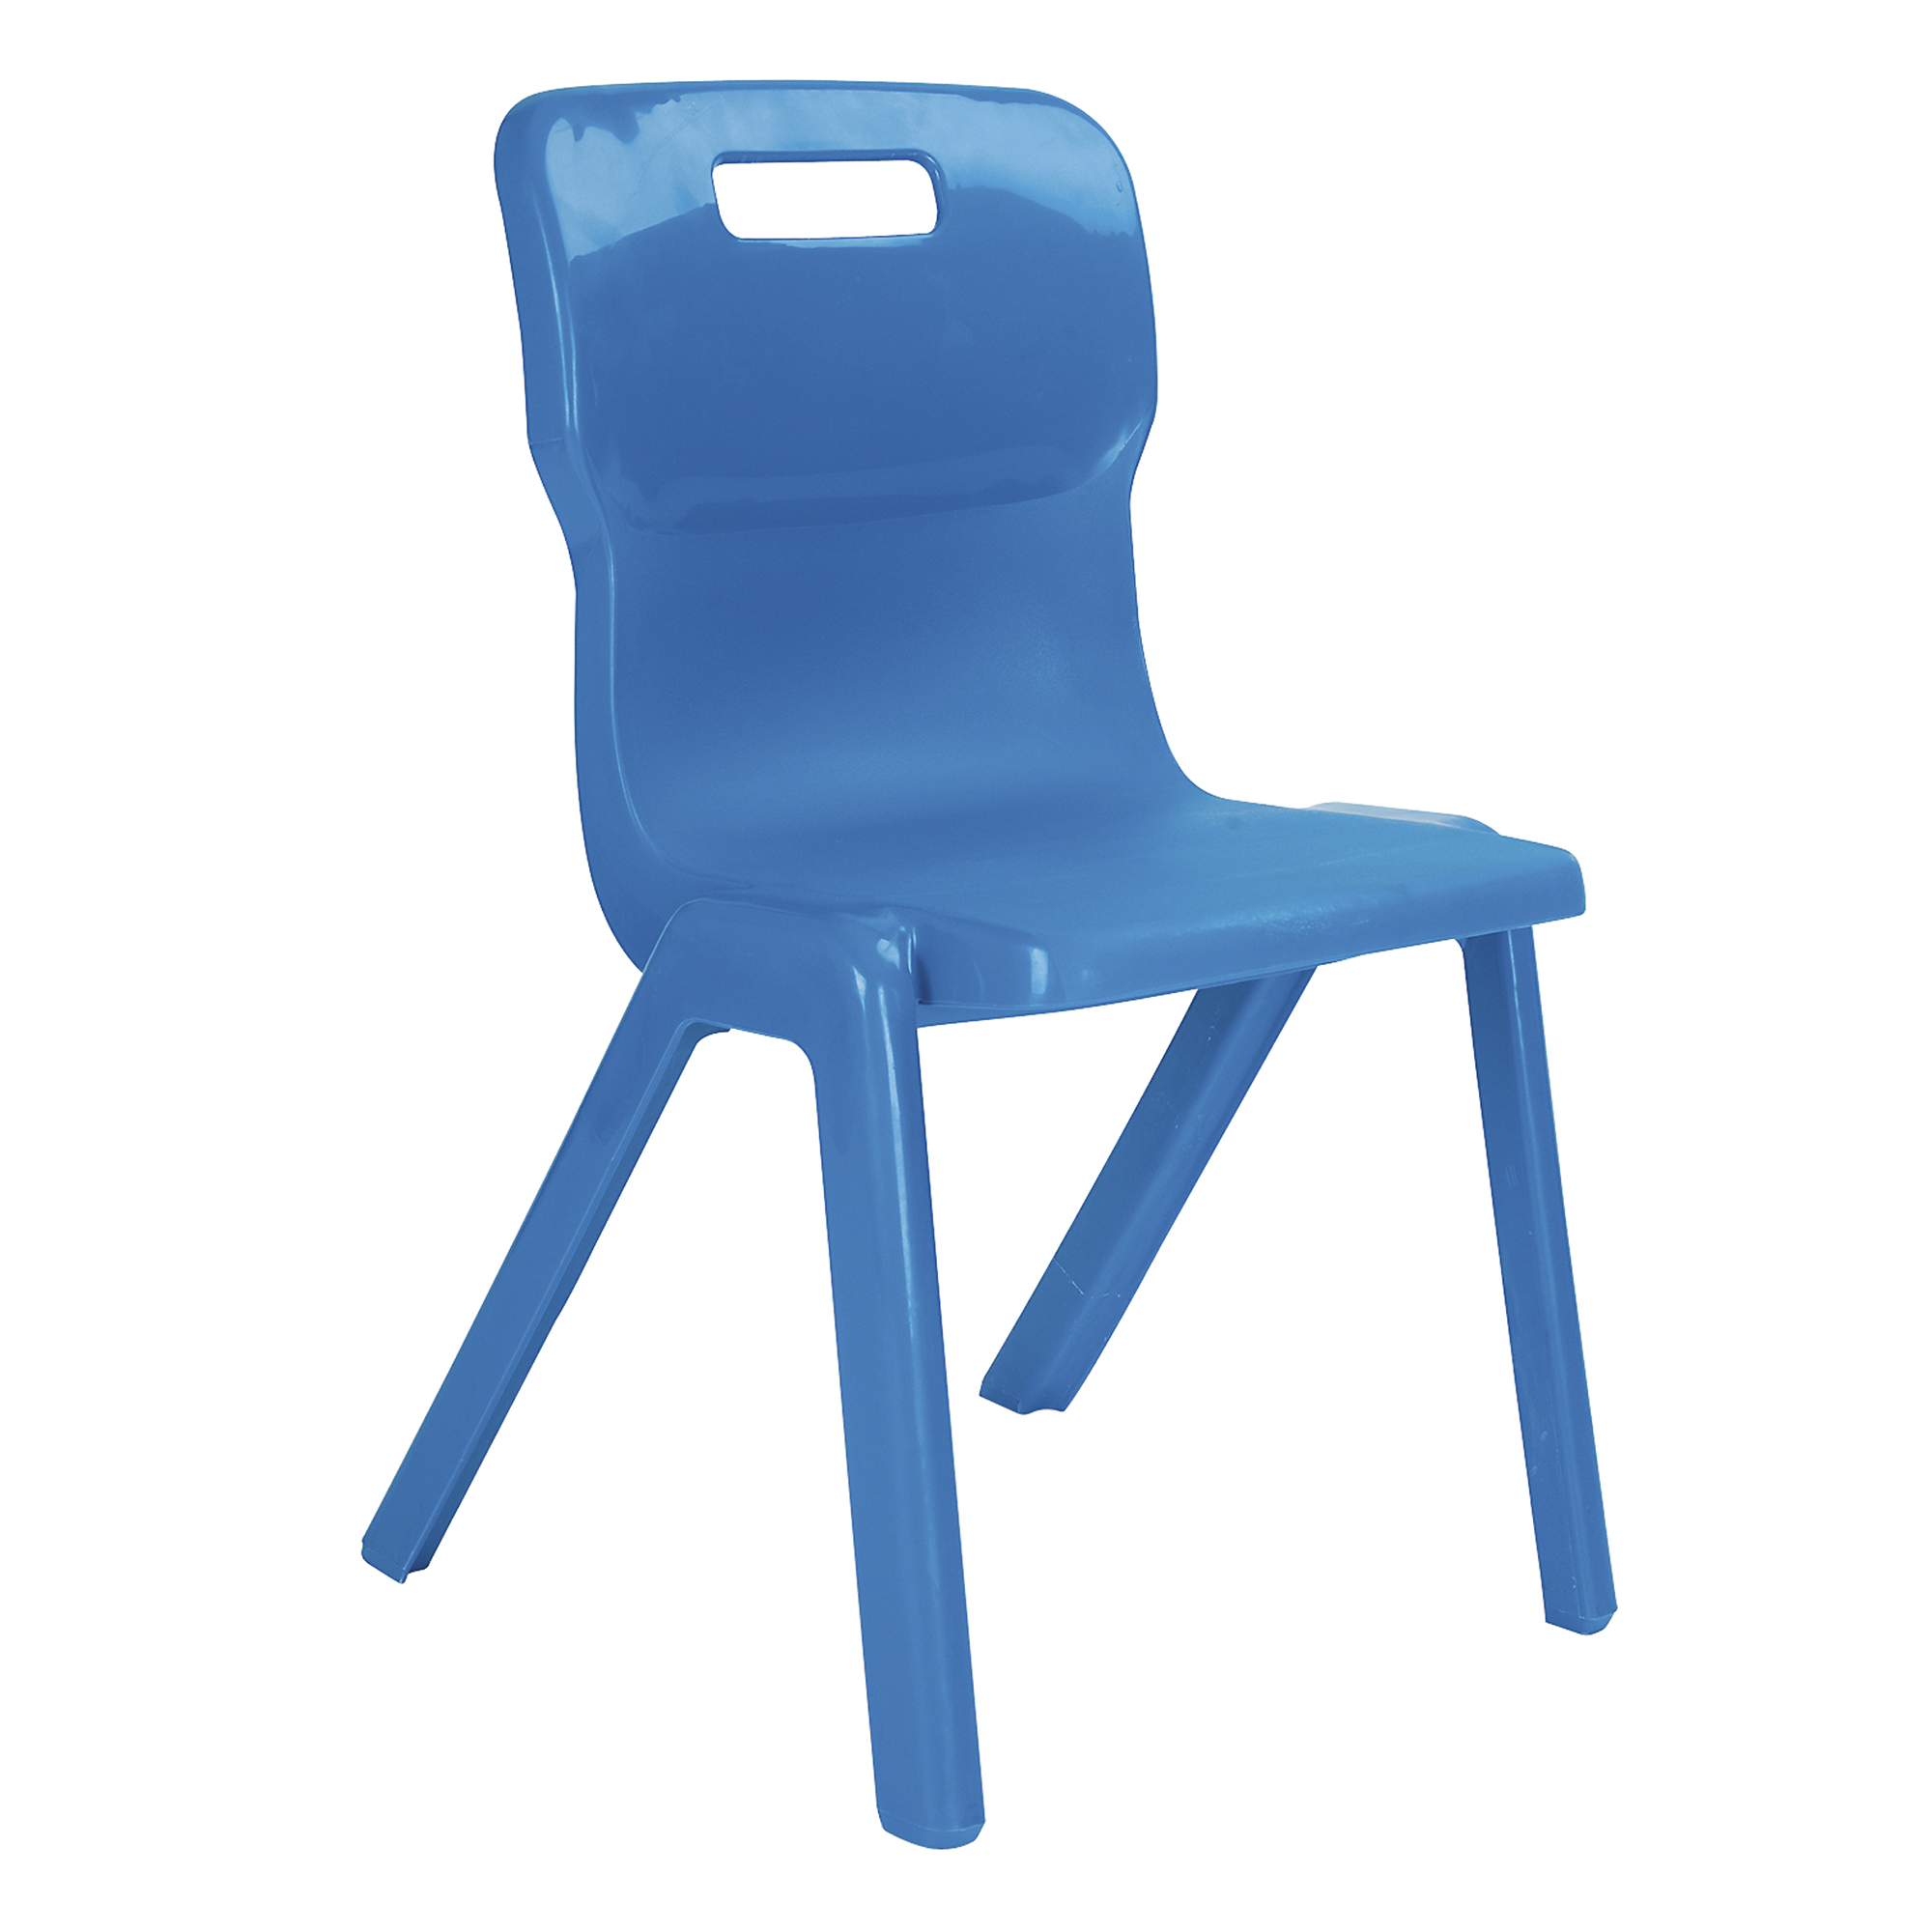 one piece titan chair  size 3 ages 68 blue